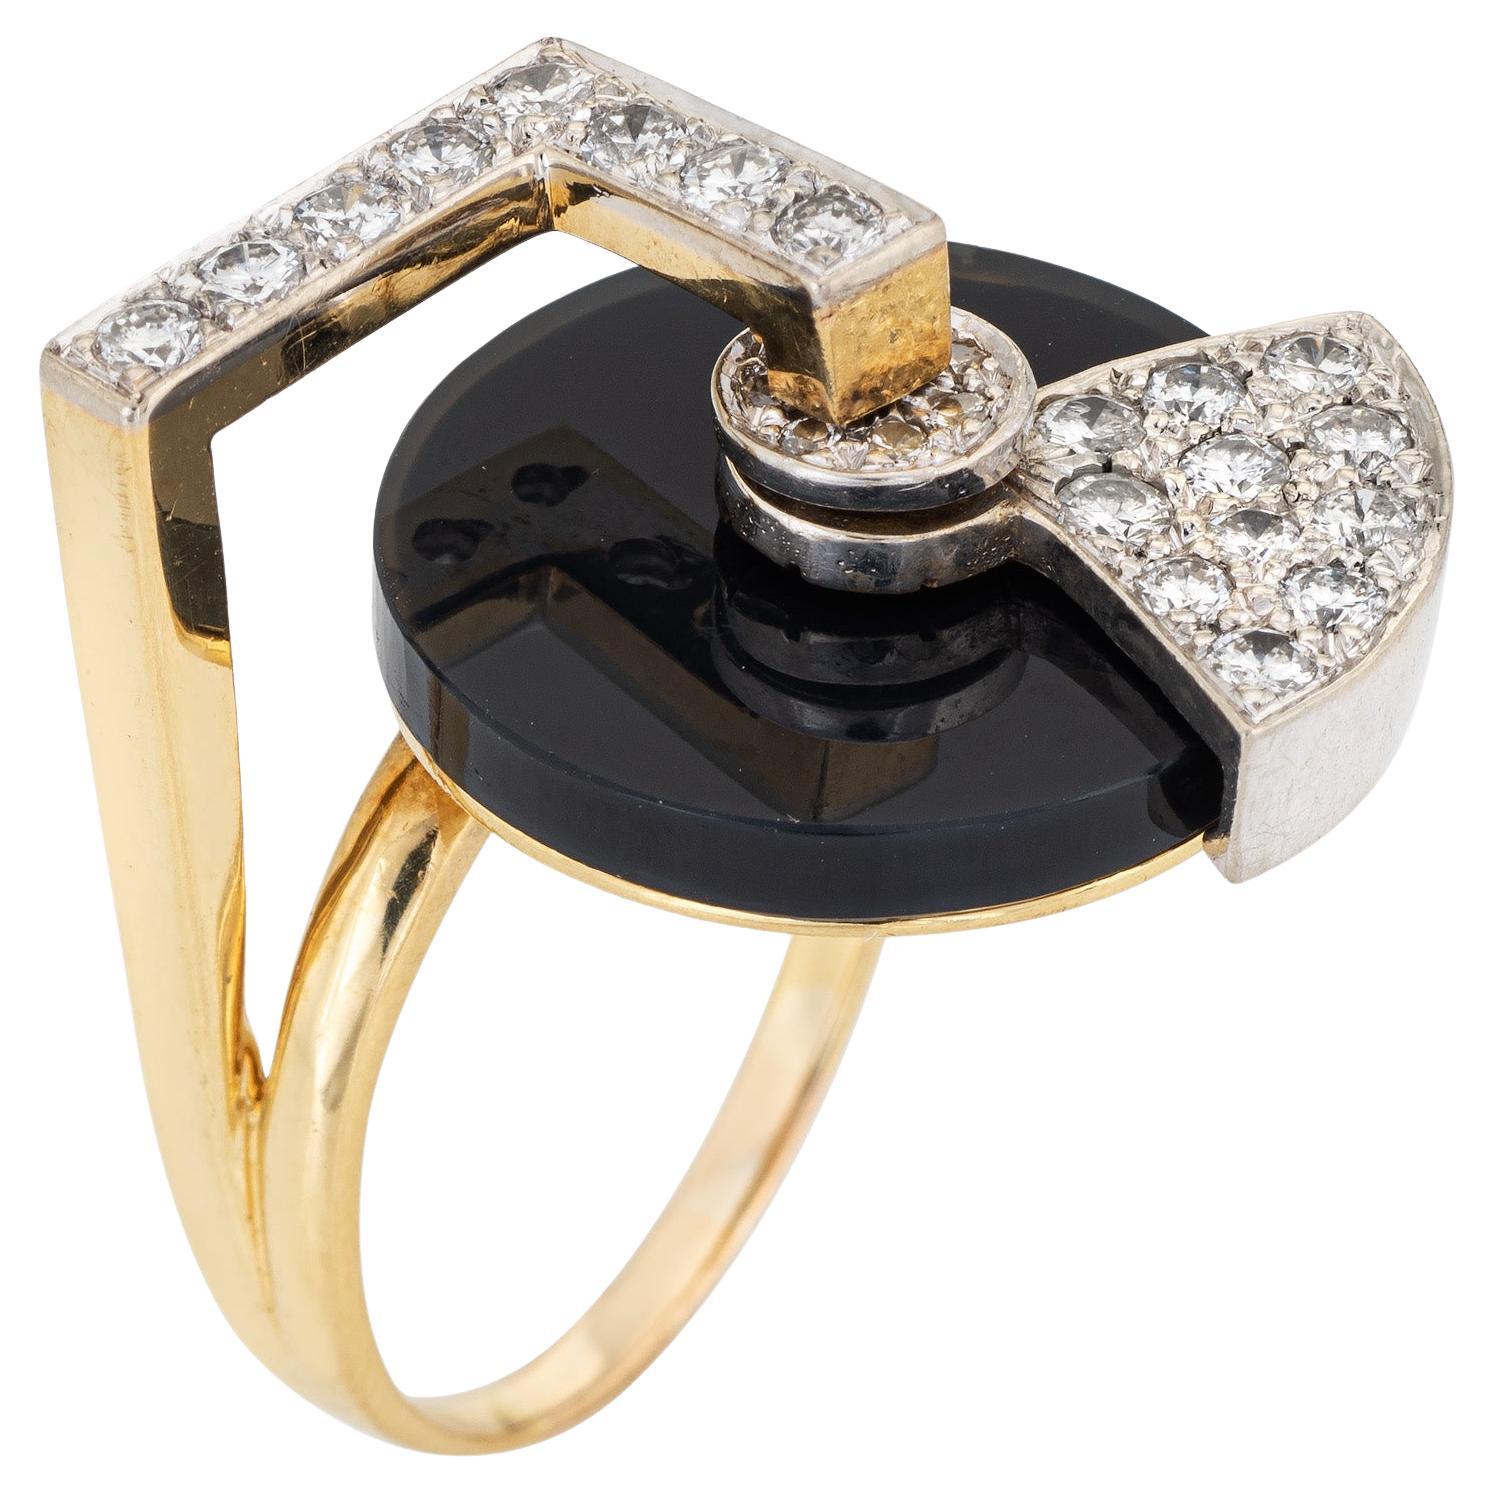 Record Player Ring Vintage Onyx Diamond Spinning Kinetic 18k Gold Geometric